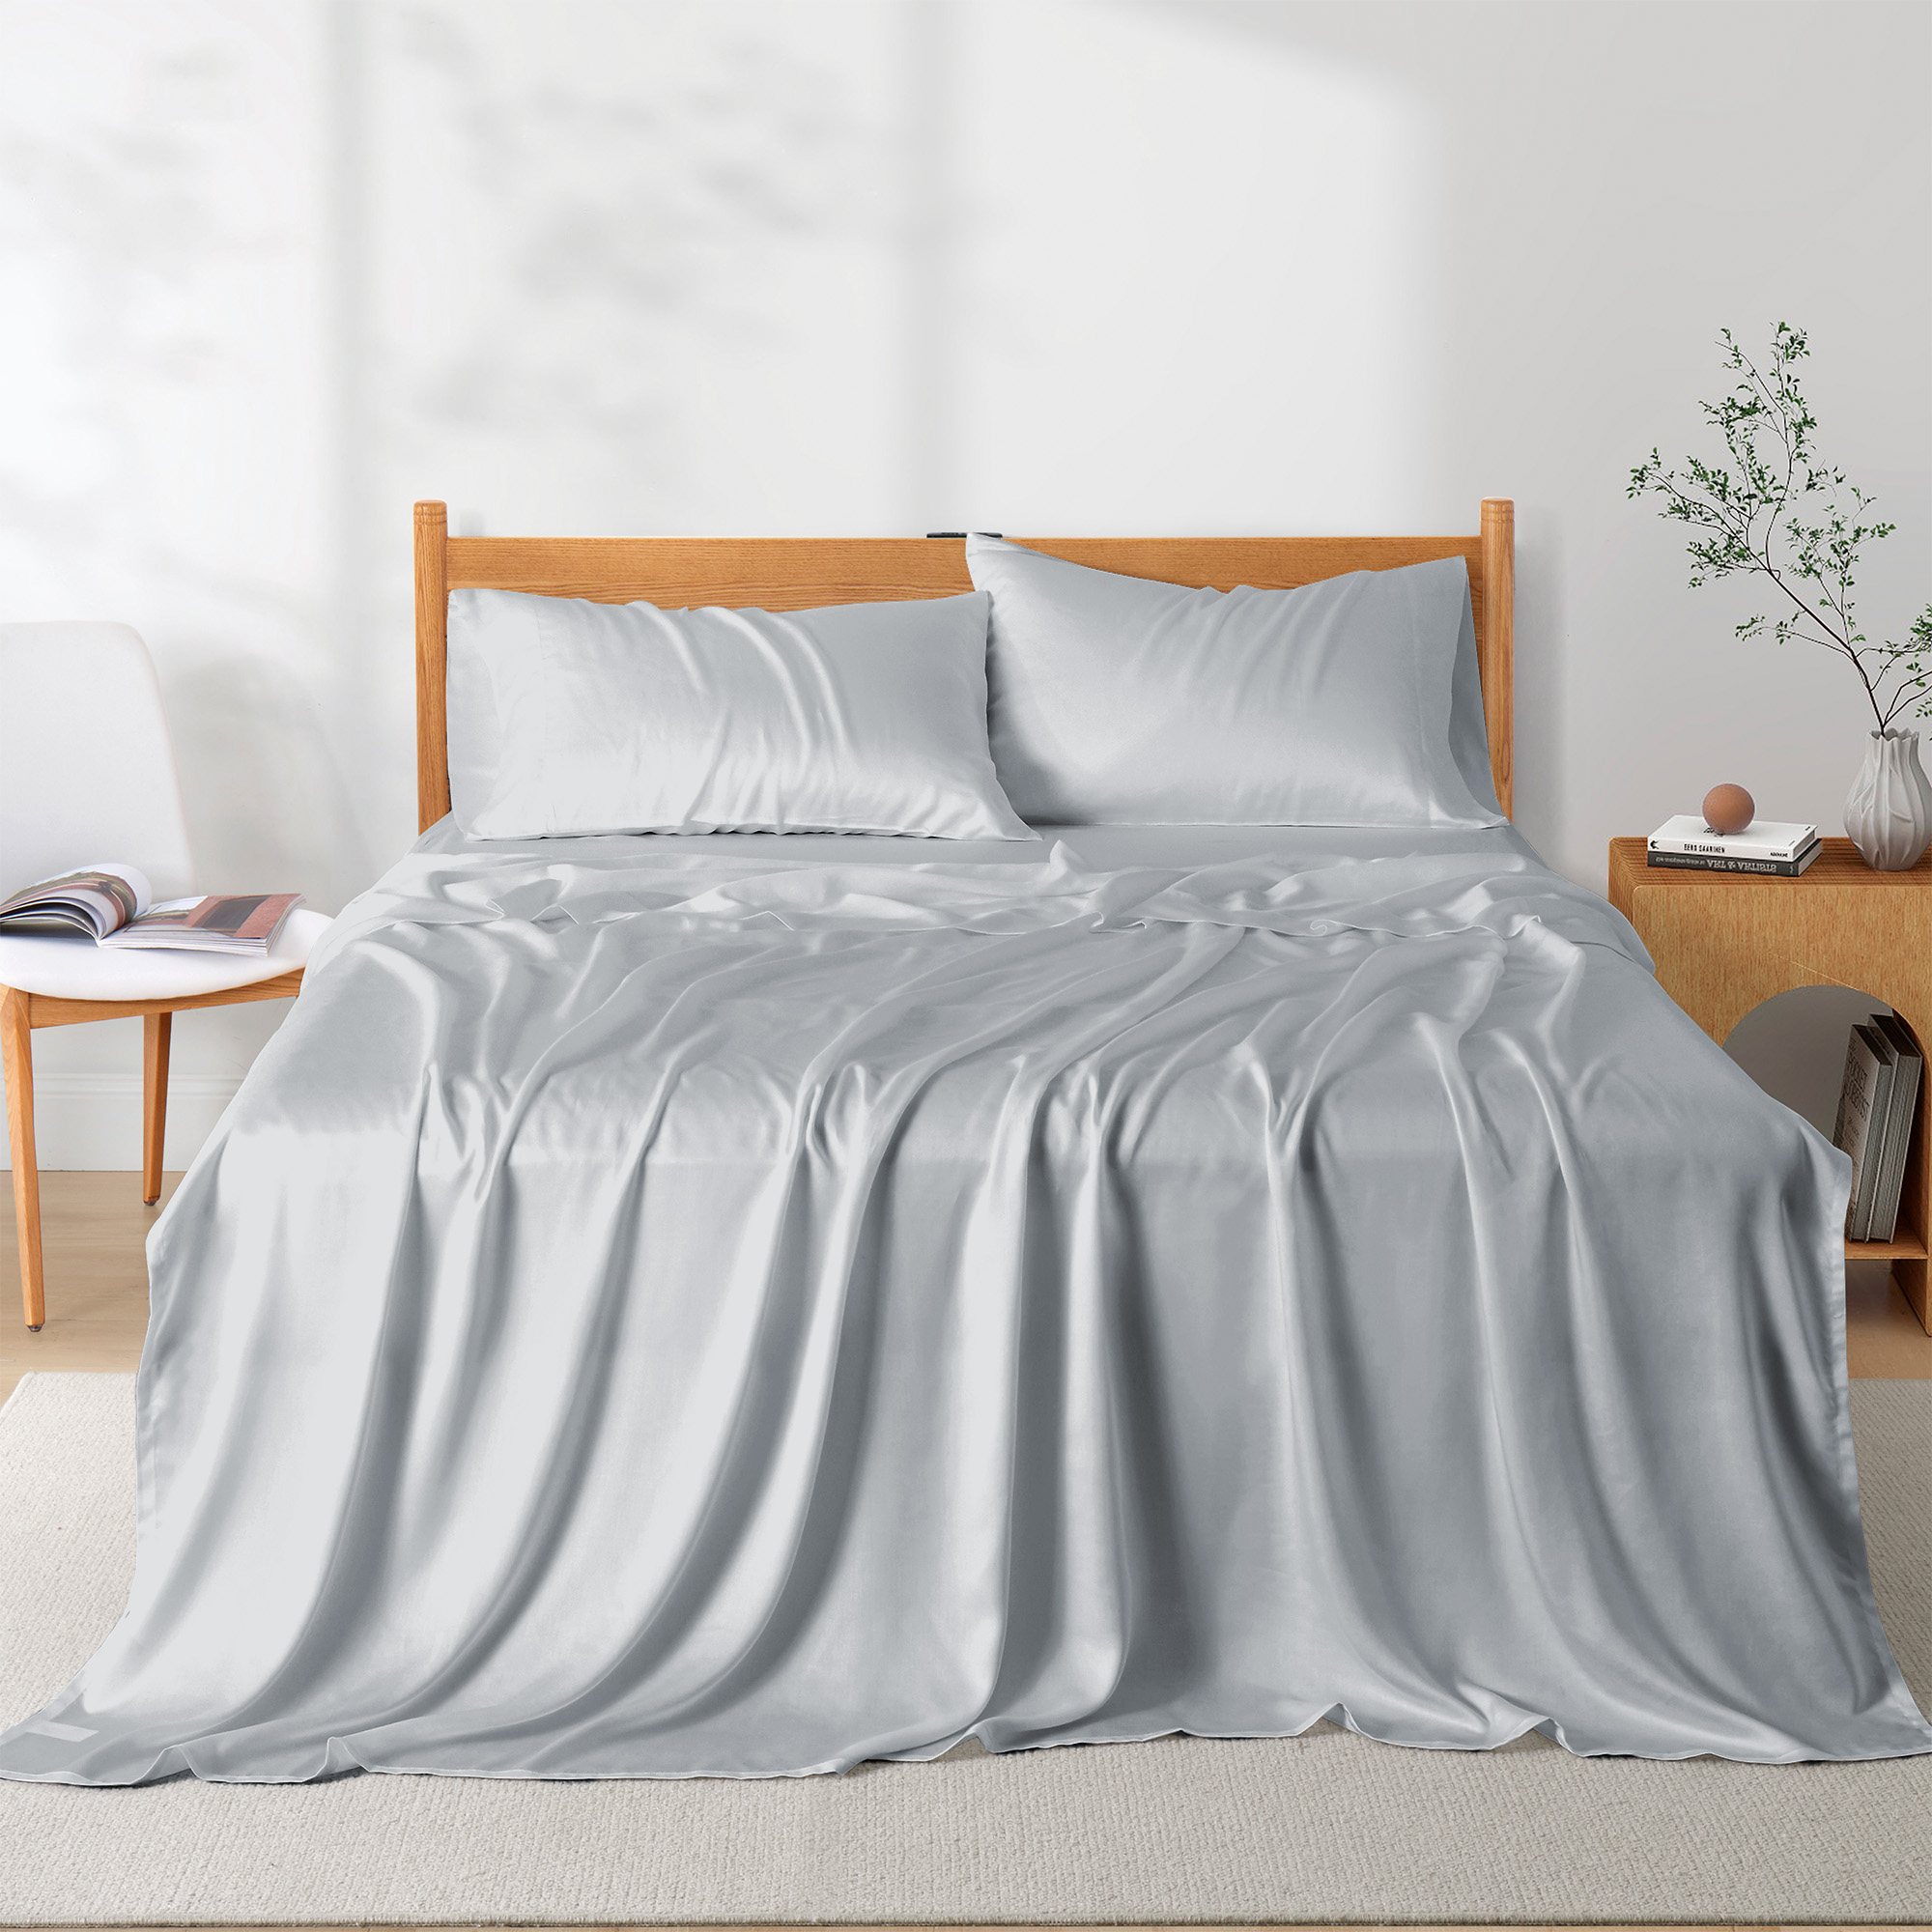 Silky Soft TENCELâ¢ Lyocell Cooling Sheet Set-Breathability And Moisture-wicking Bedding Set - Quiet Grey, Queen